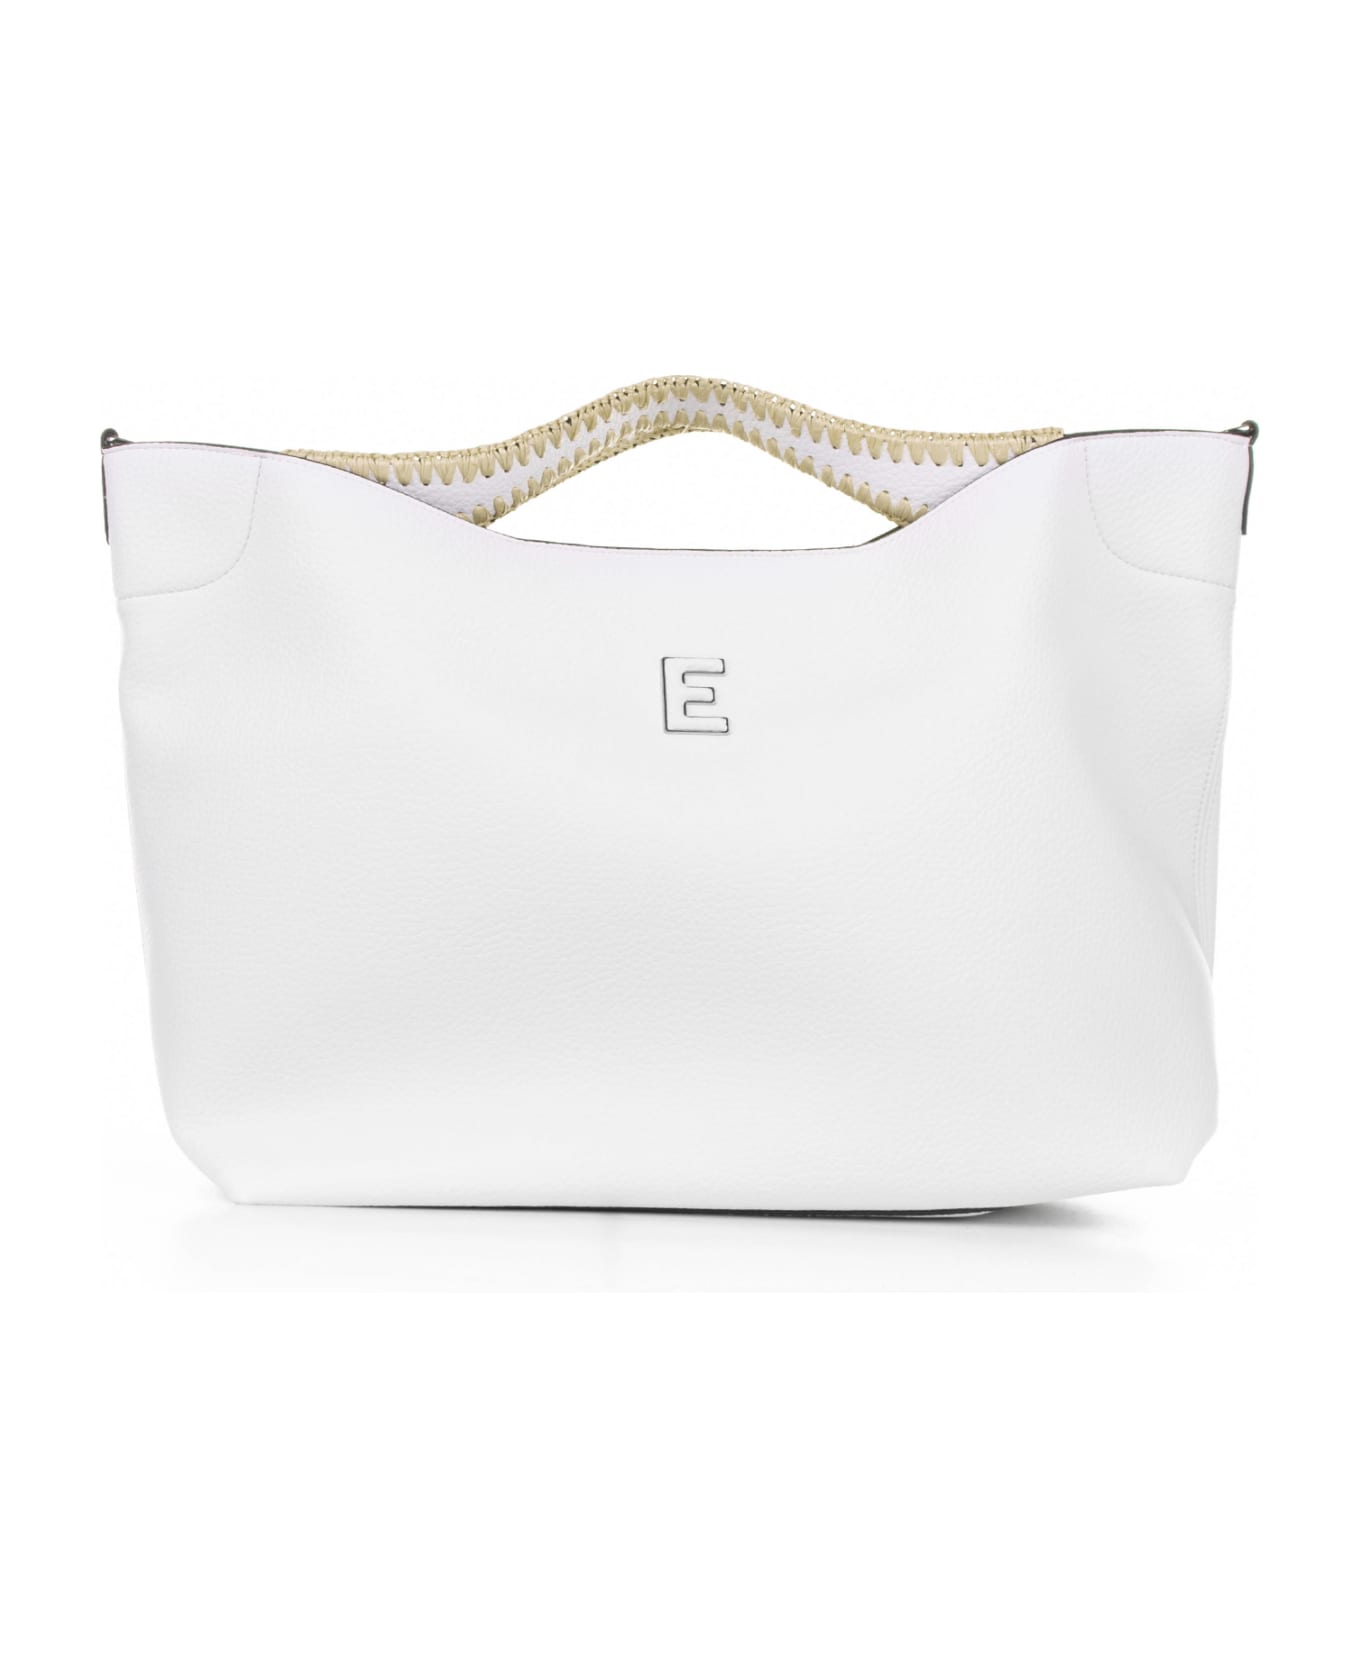 Ermanno Scervino Rachele Large White Leather Handbag - BIANCO